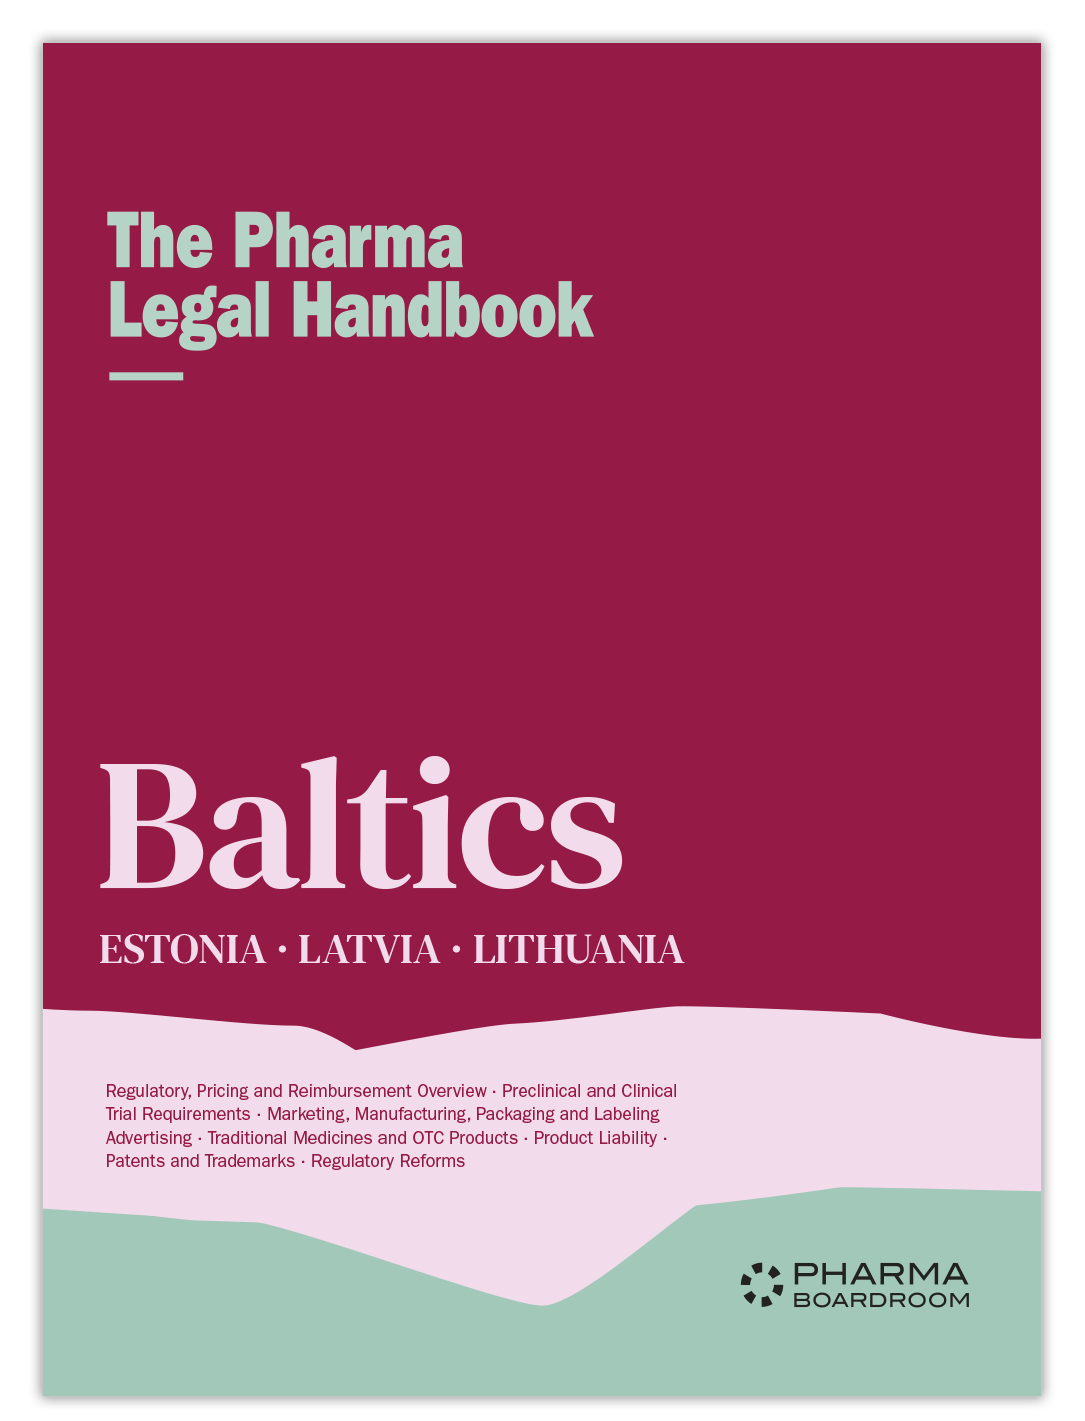 The Pharma Legal Handbook: Baltics (Lithuania, Latvia and Estonia)